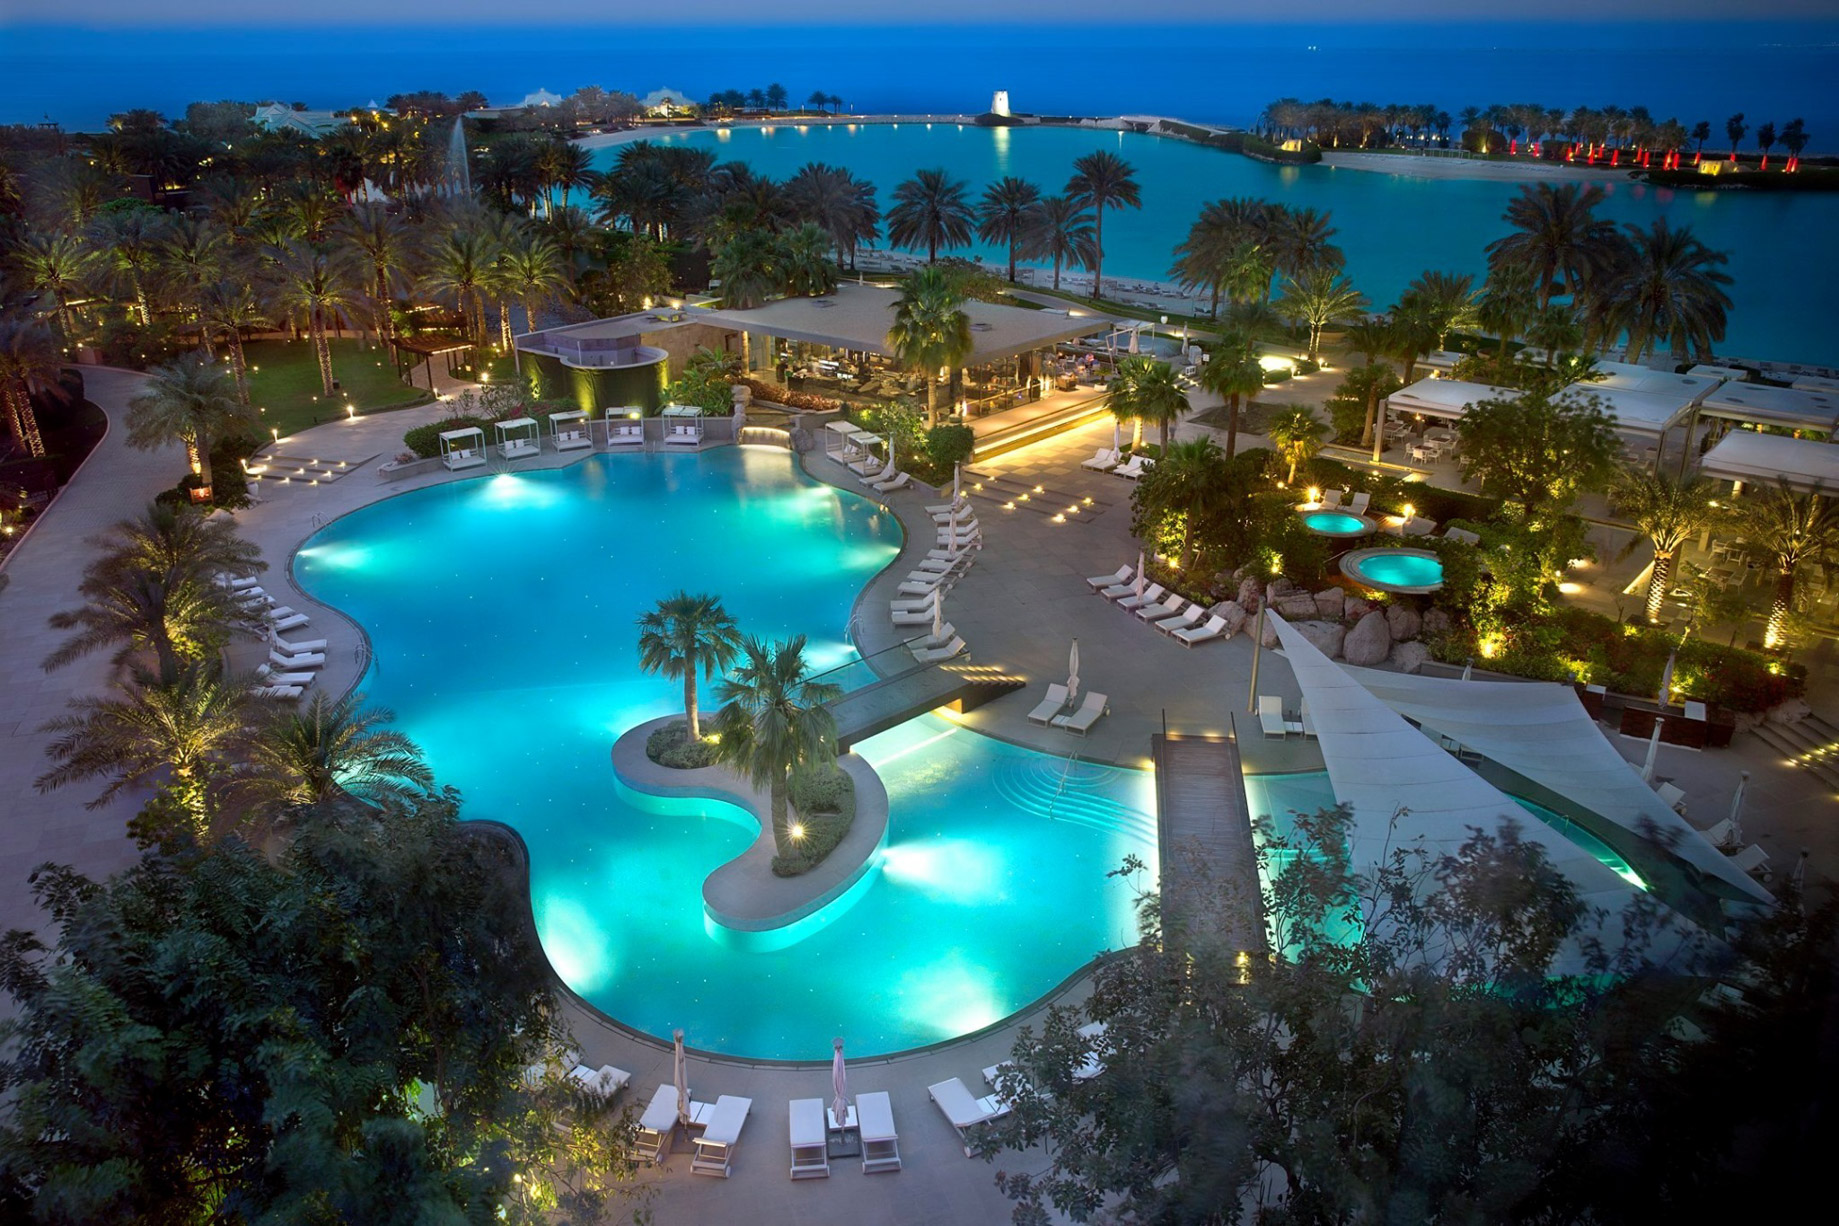 The Ritz-Carlton, Bahrain Resort Hotel - Manama, Bahrain - Outdoor Pool Aerial Night View